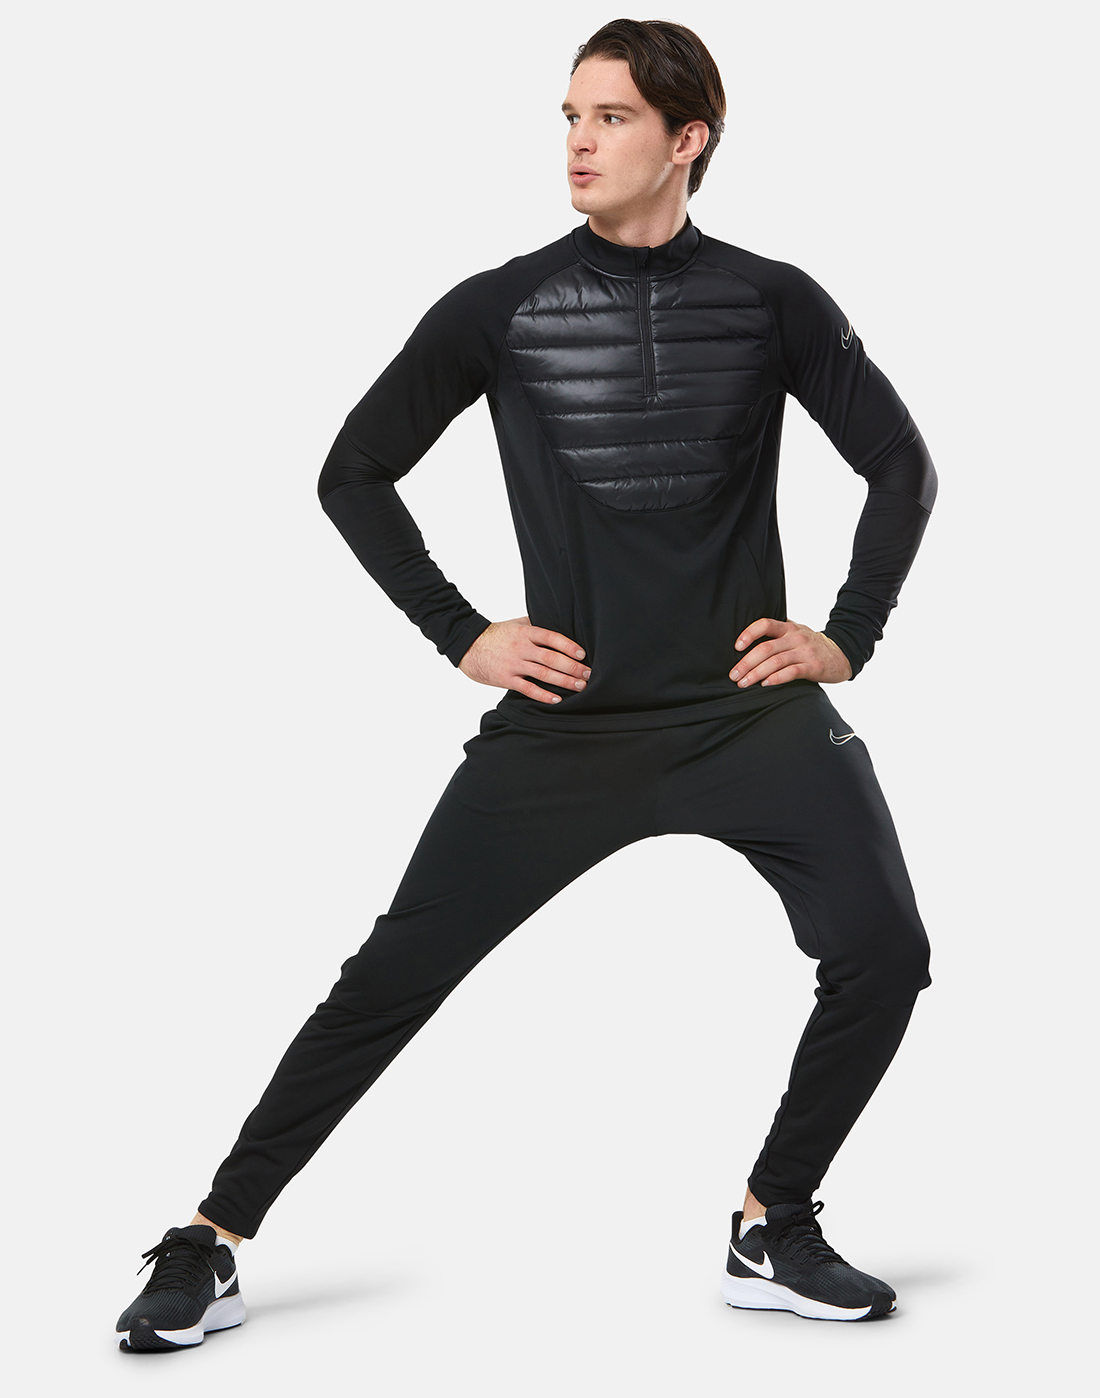 Nike Mens Winter Warrior Academy Pant - Black | Life Style Sports UK